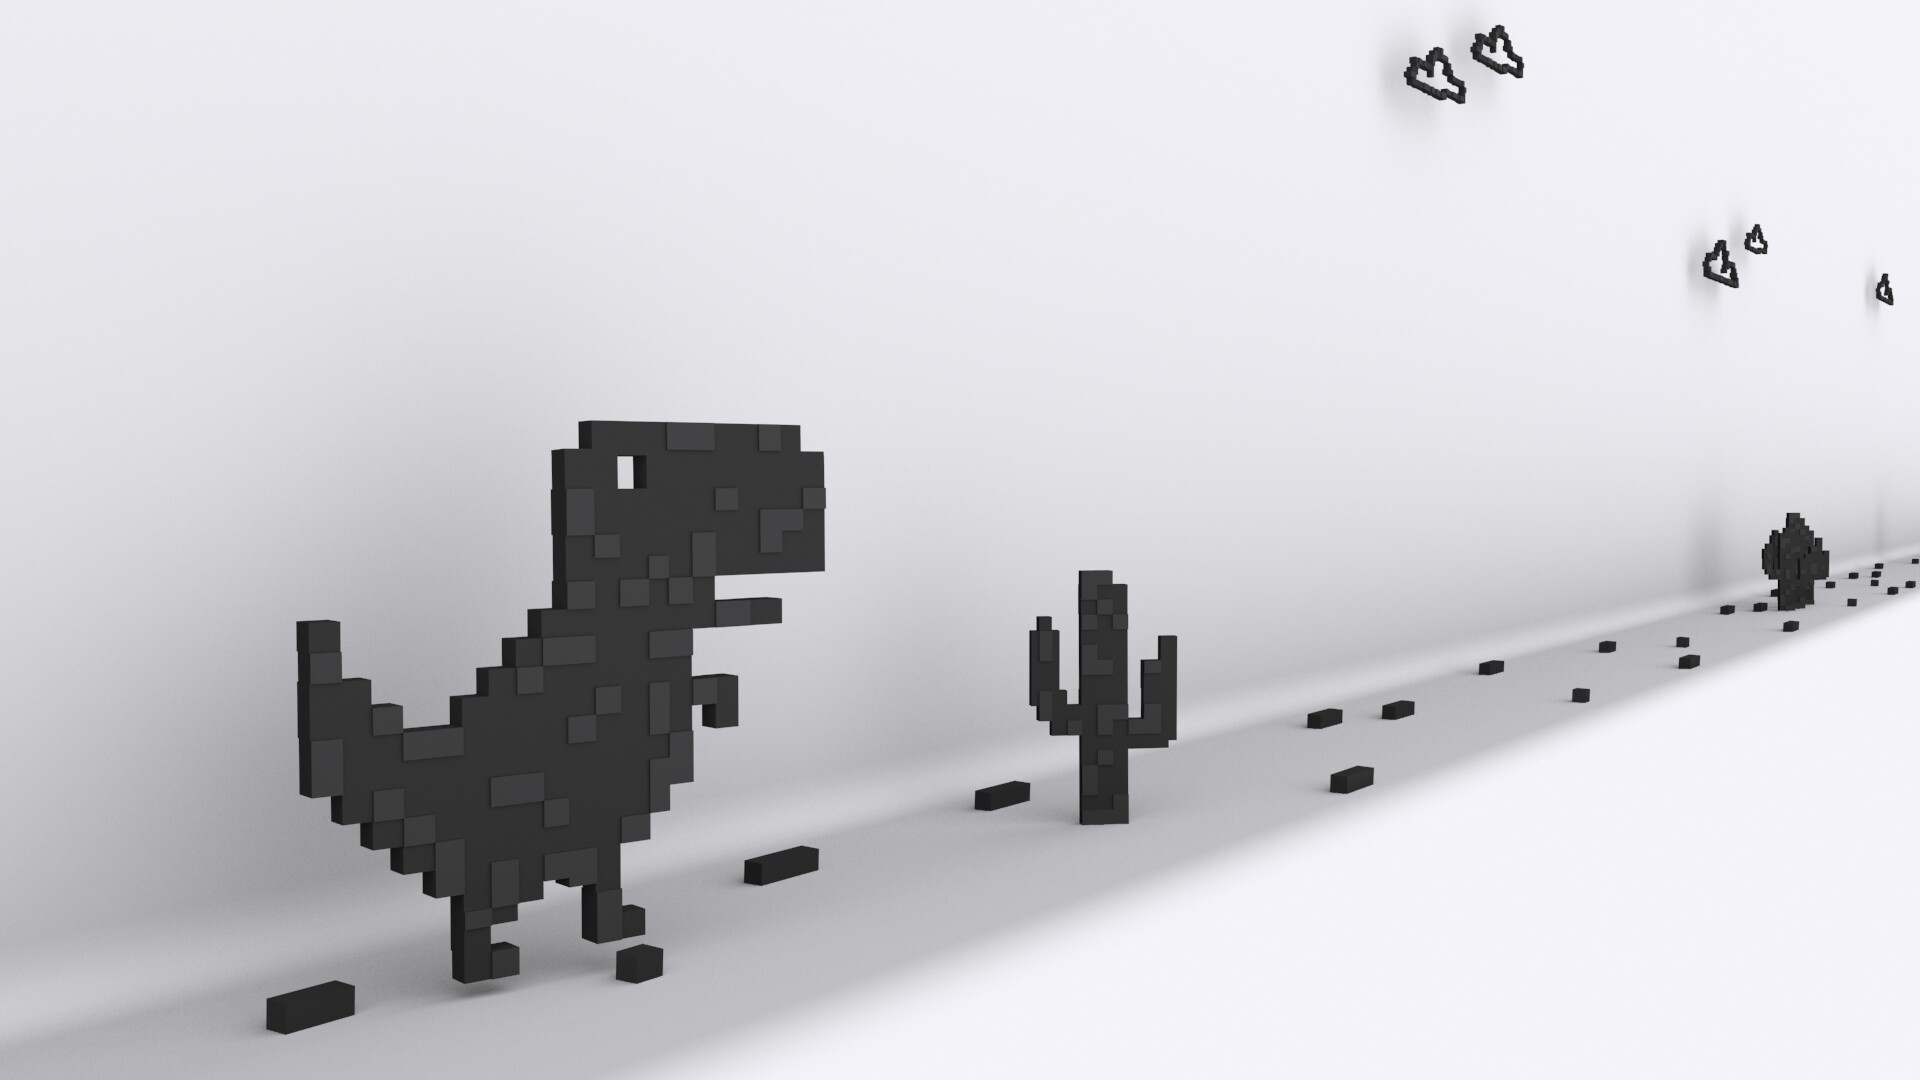 ArtStation - T-rex Game Animation